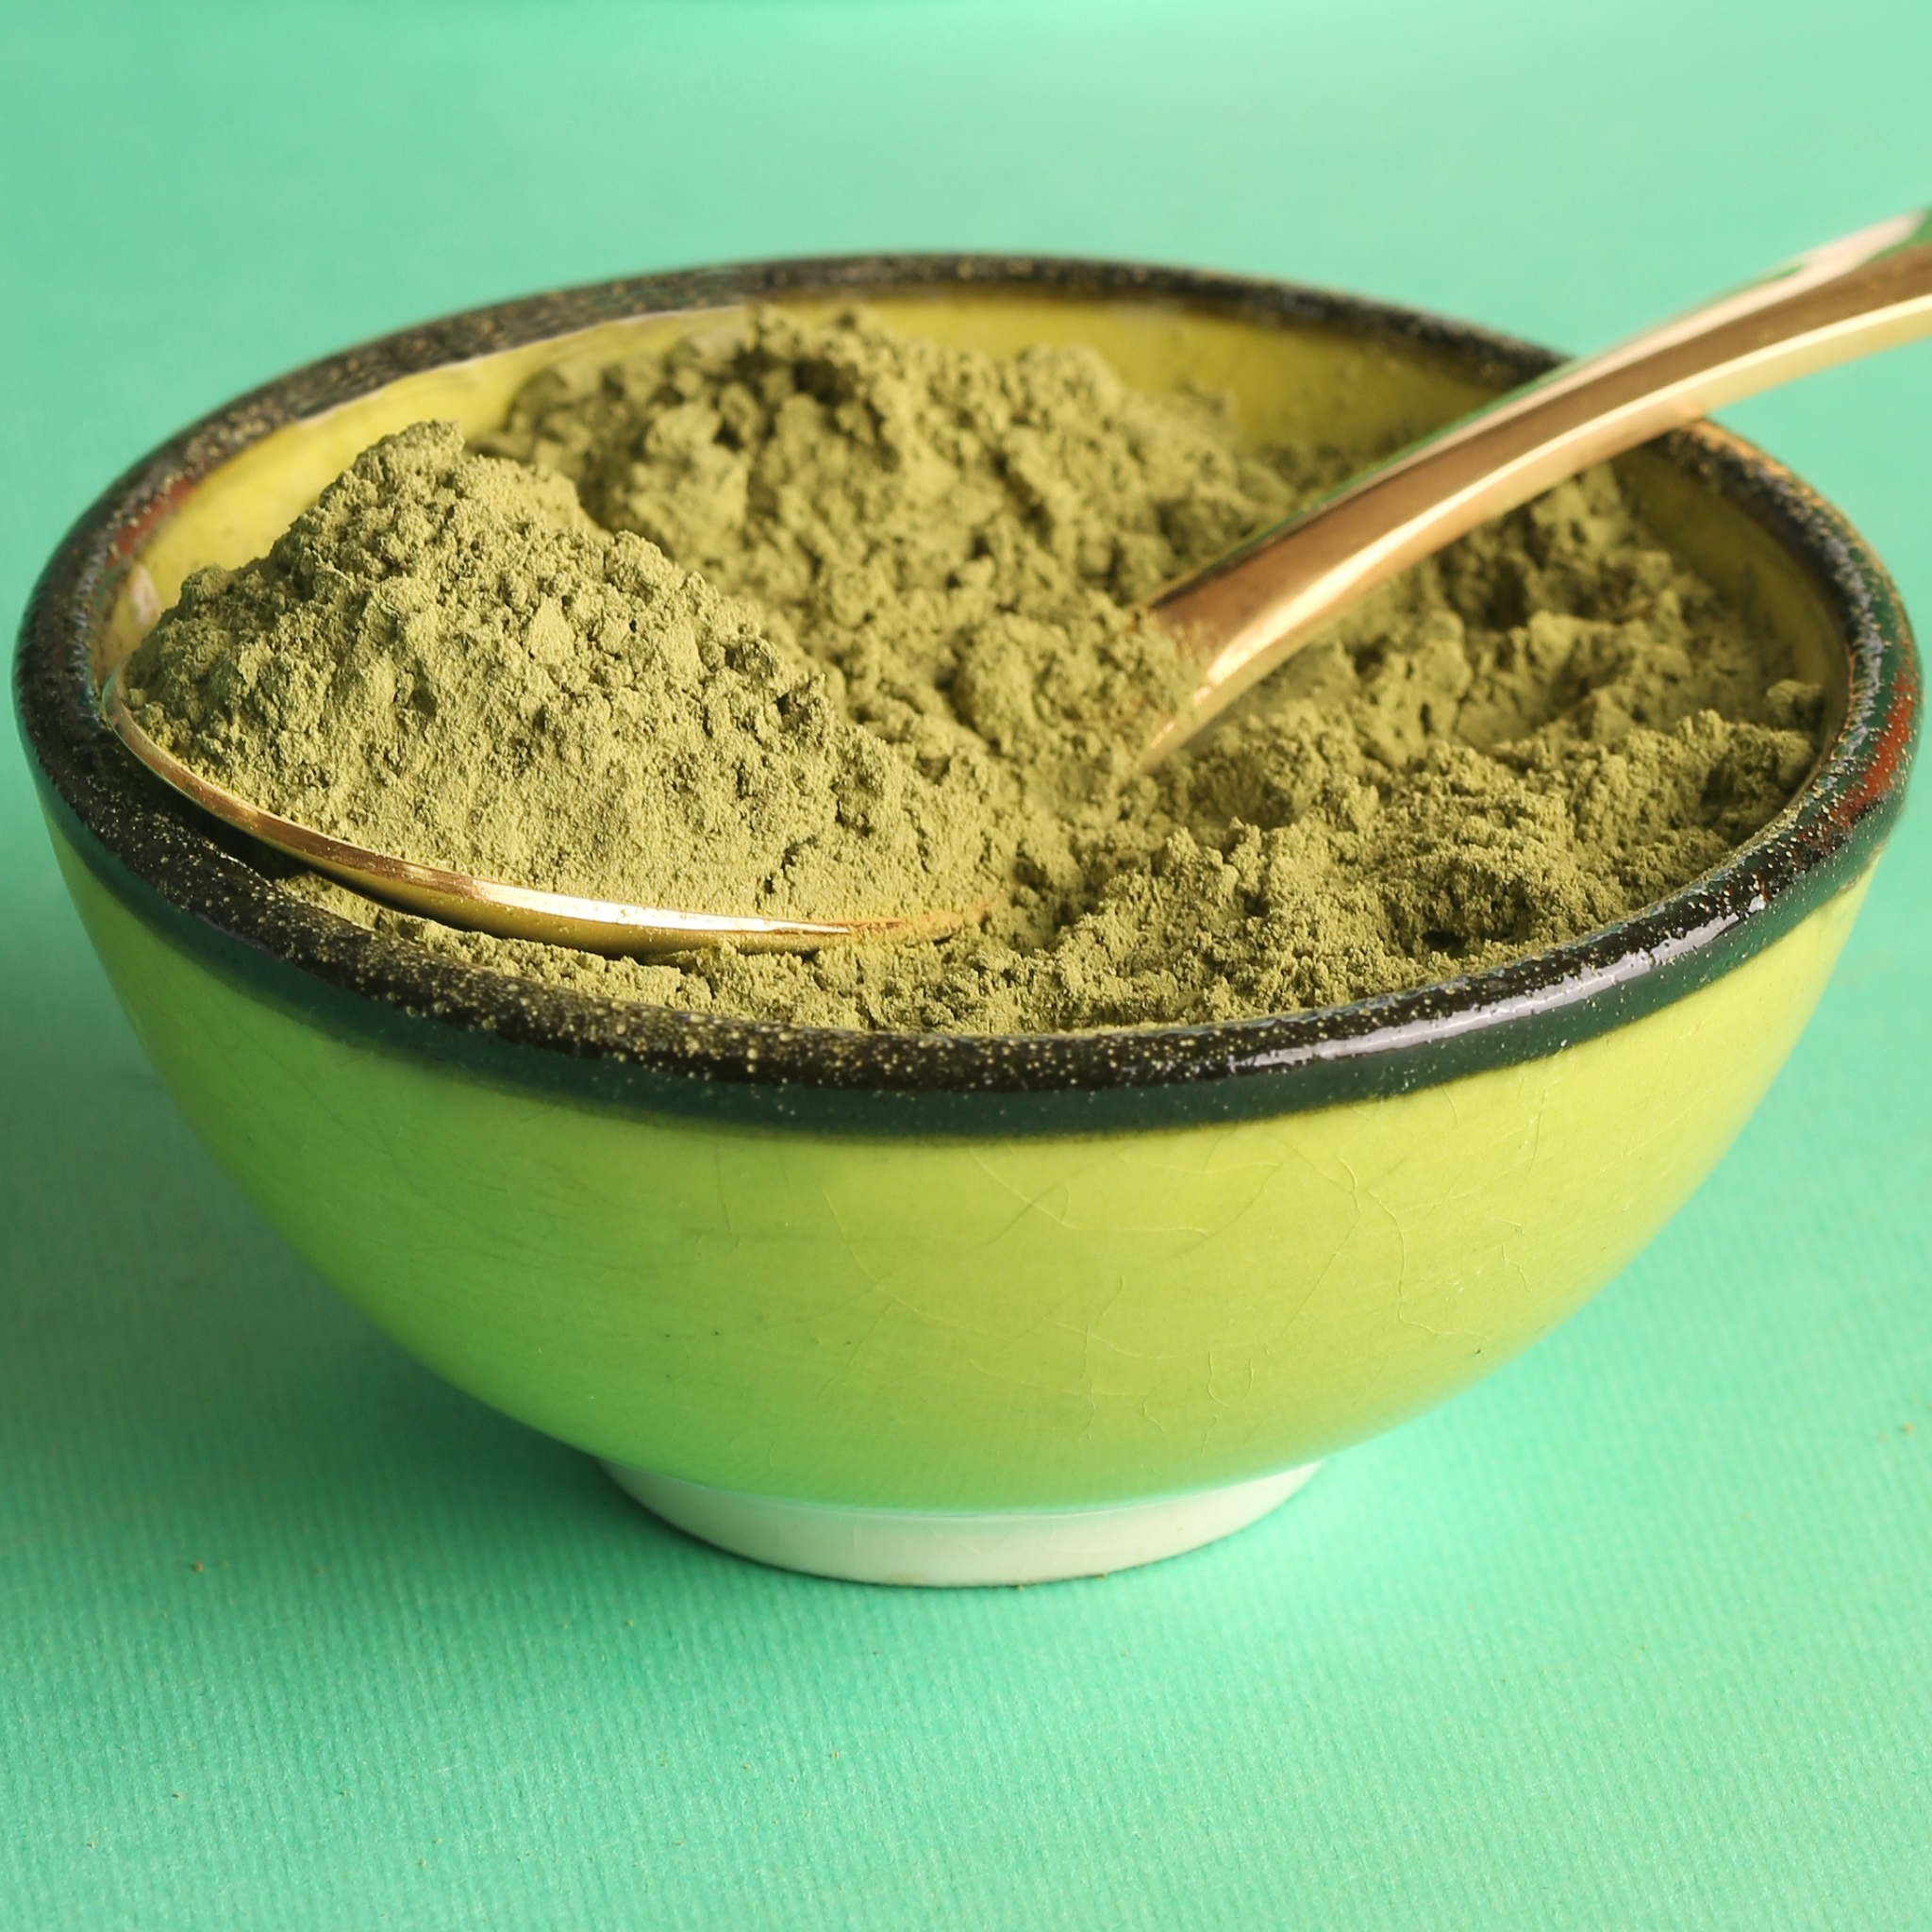 Vitafit Barley Grass Powder